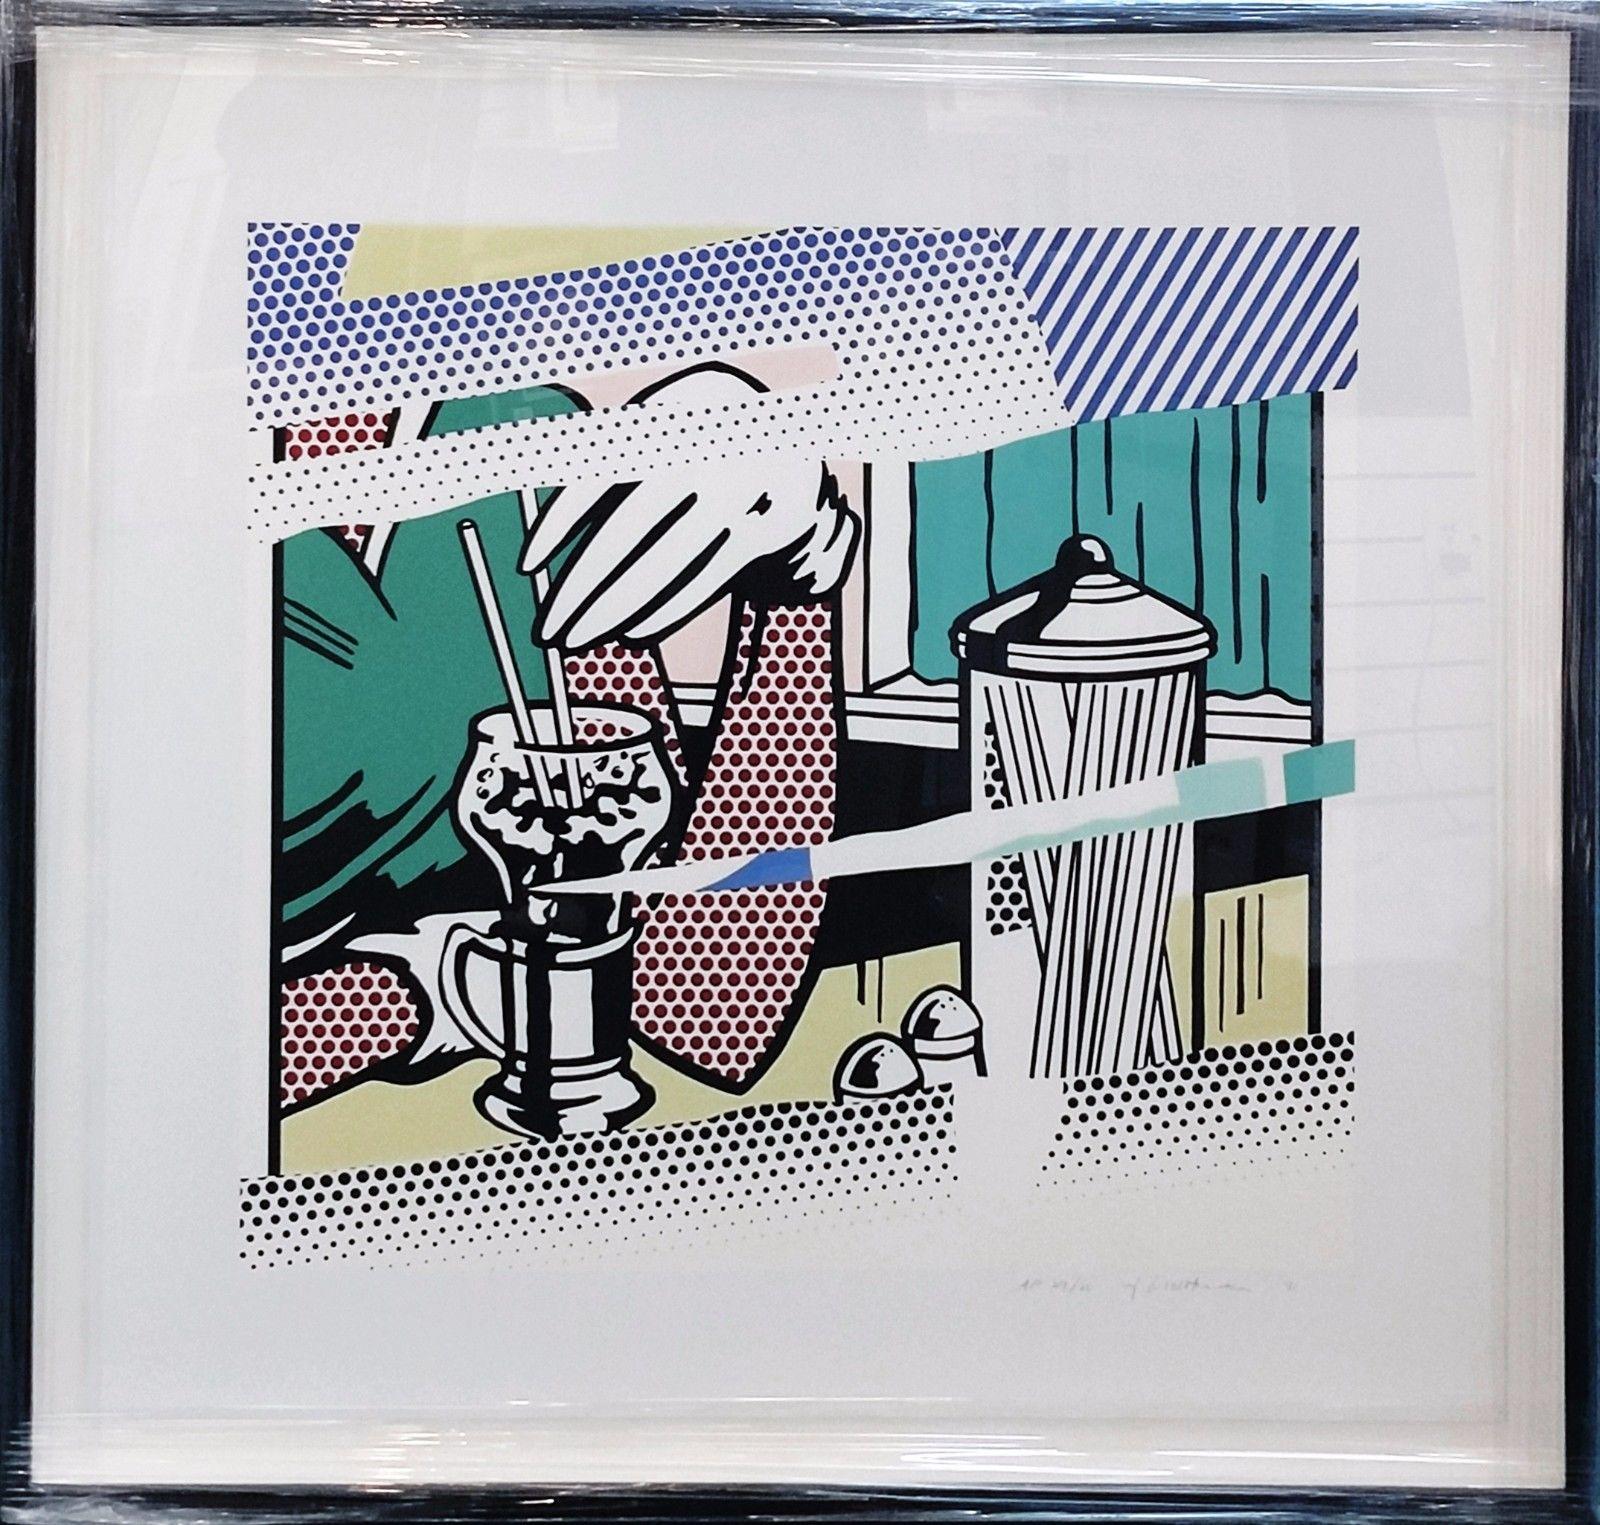 REFLECTIONS ON SODA FOUNTAIN - Print by Roy Lichtenstein